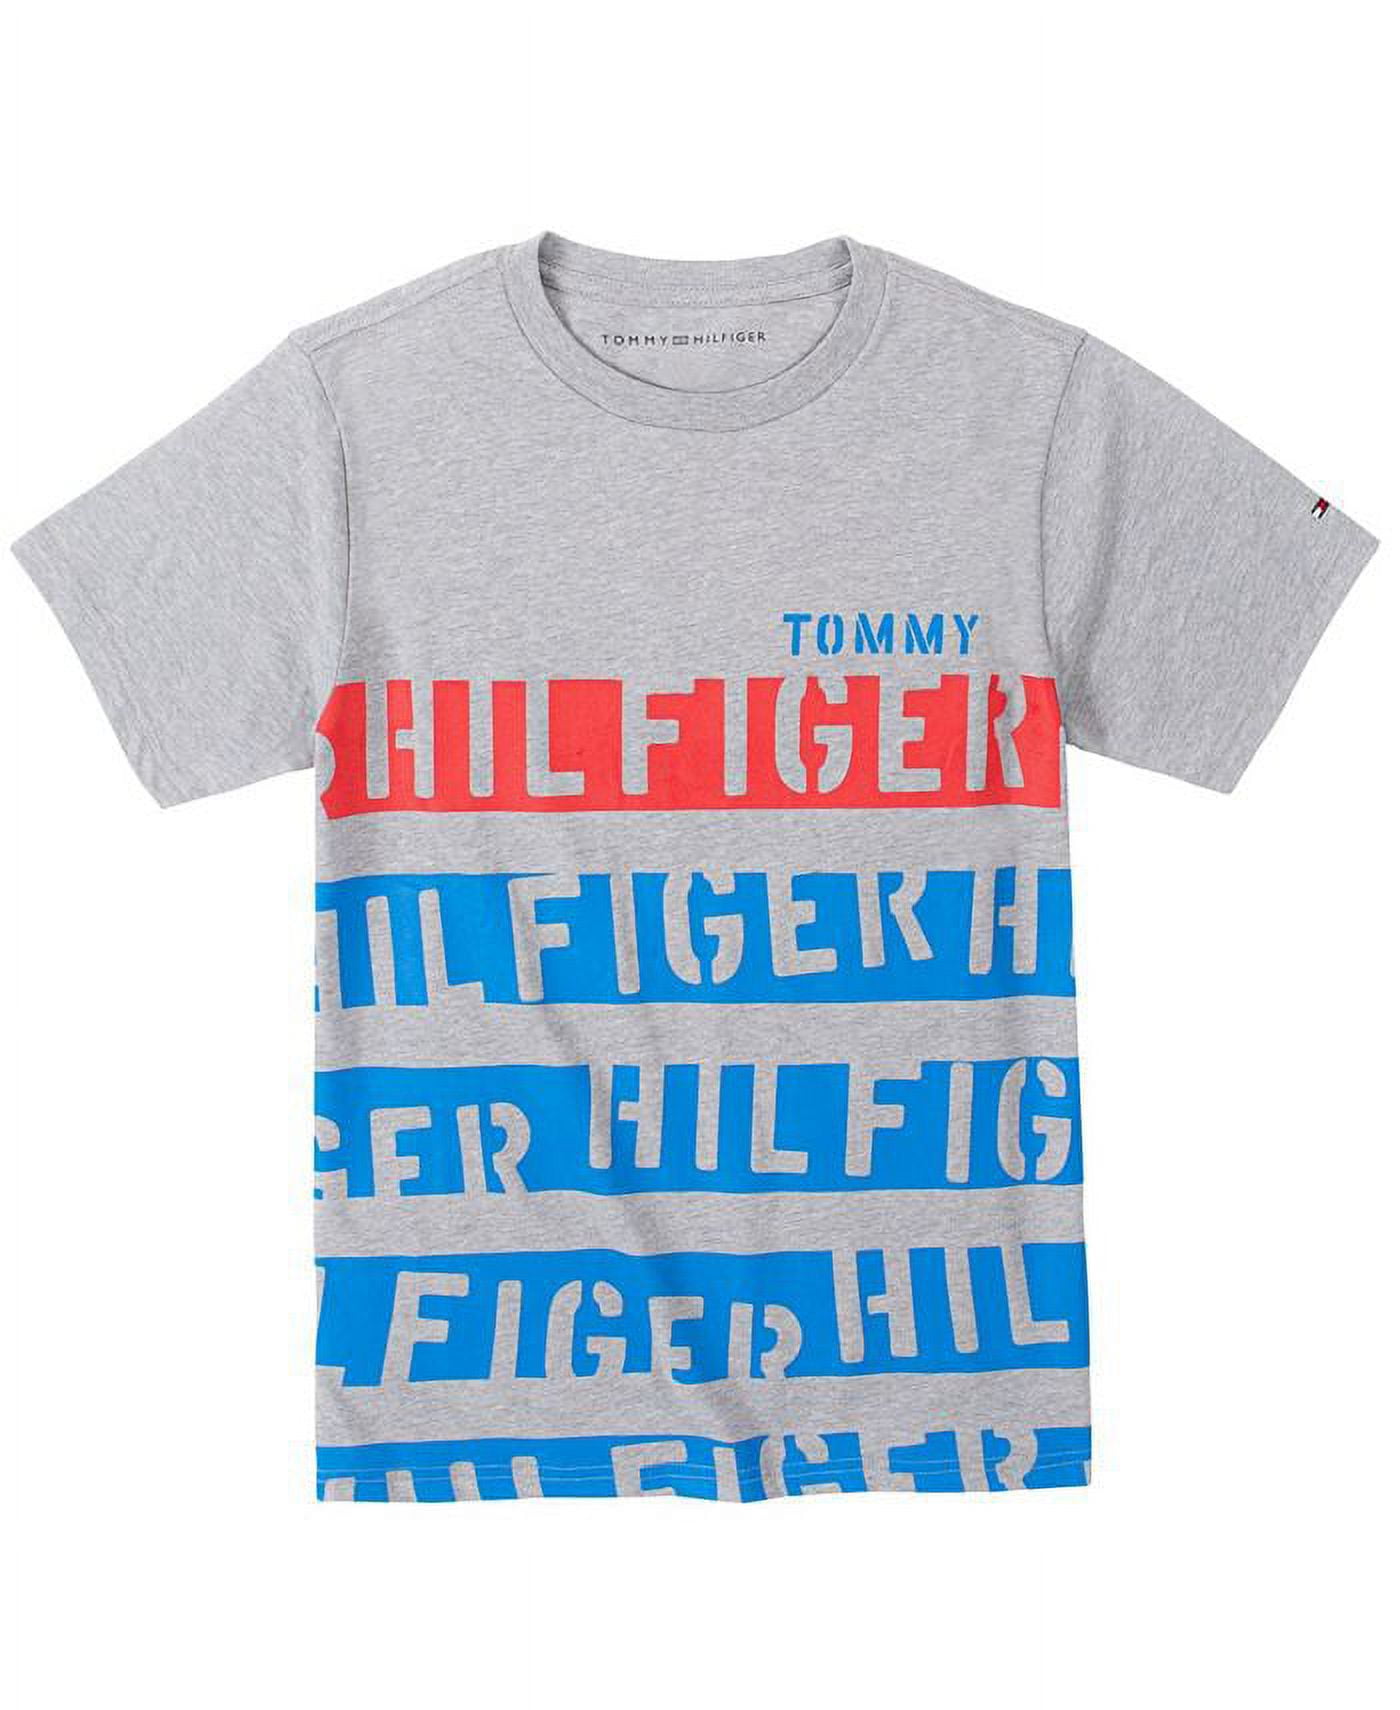 Tommy Hilfiger Boys GREY HEATHER Logo Print Tate T-Shirt M (12/14) BOYS